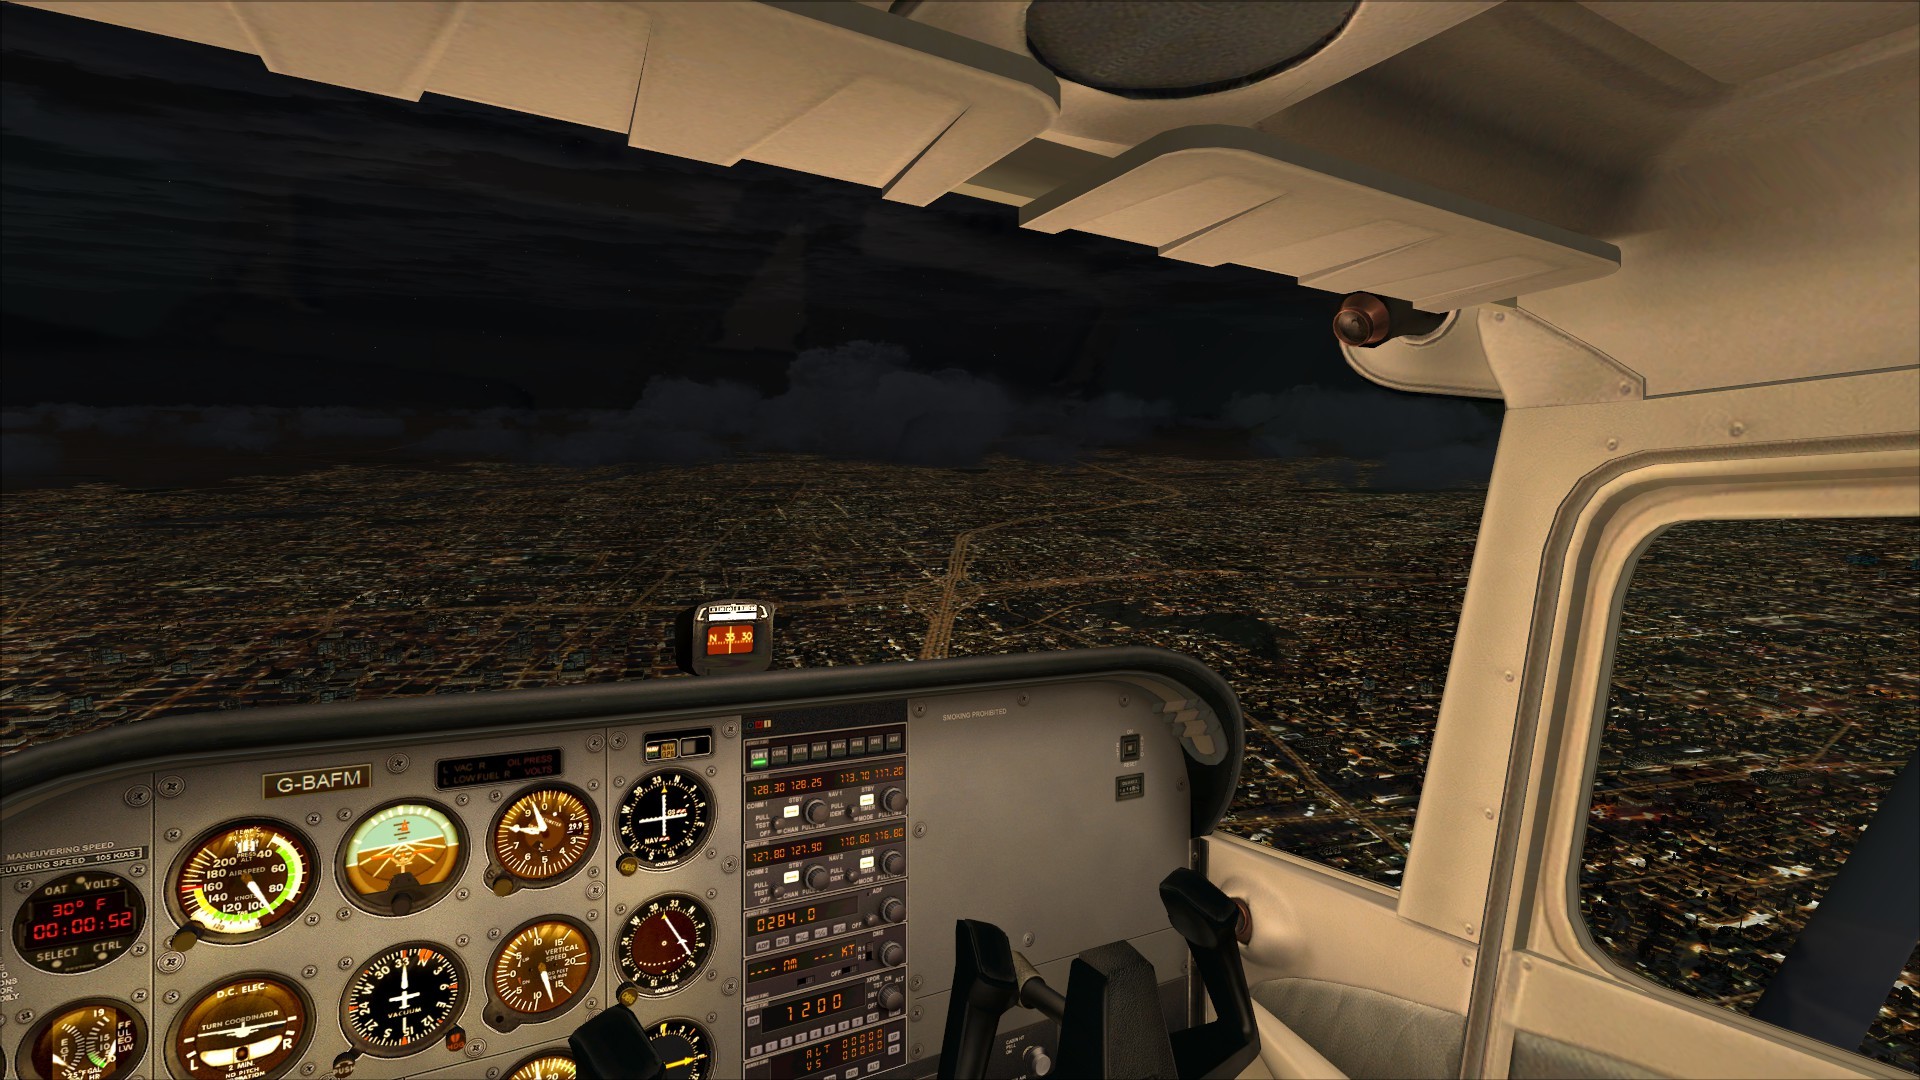 flight simulator x steam edition